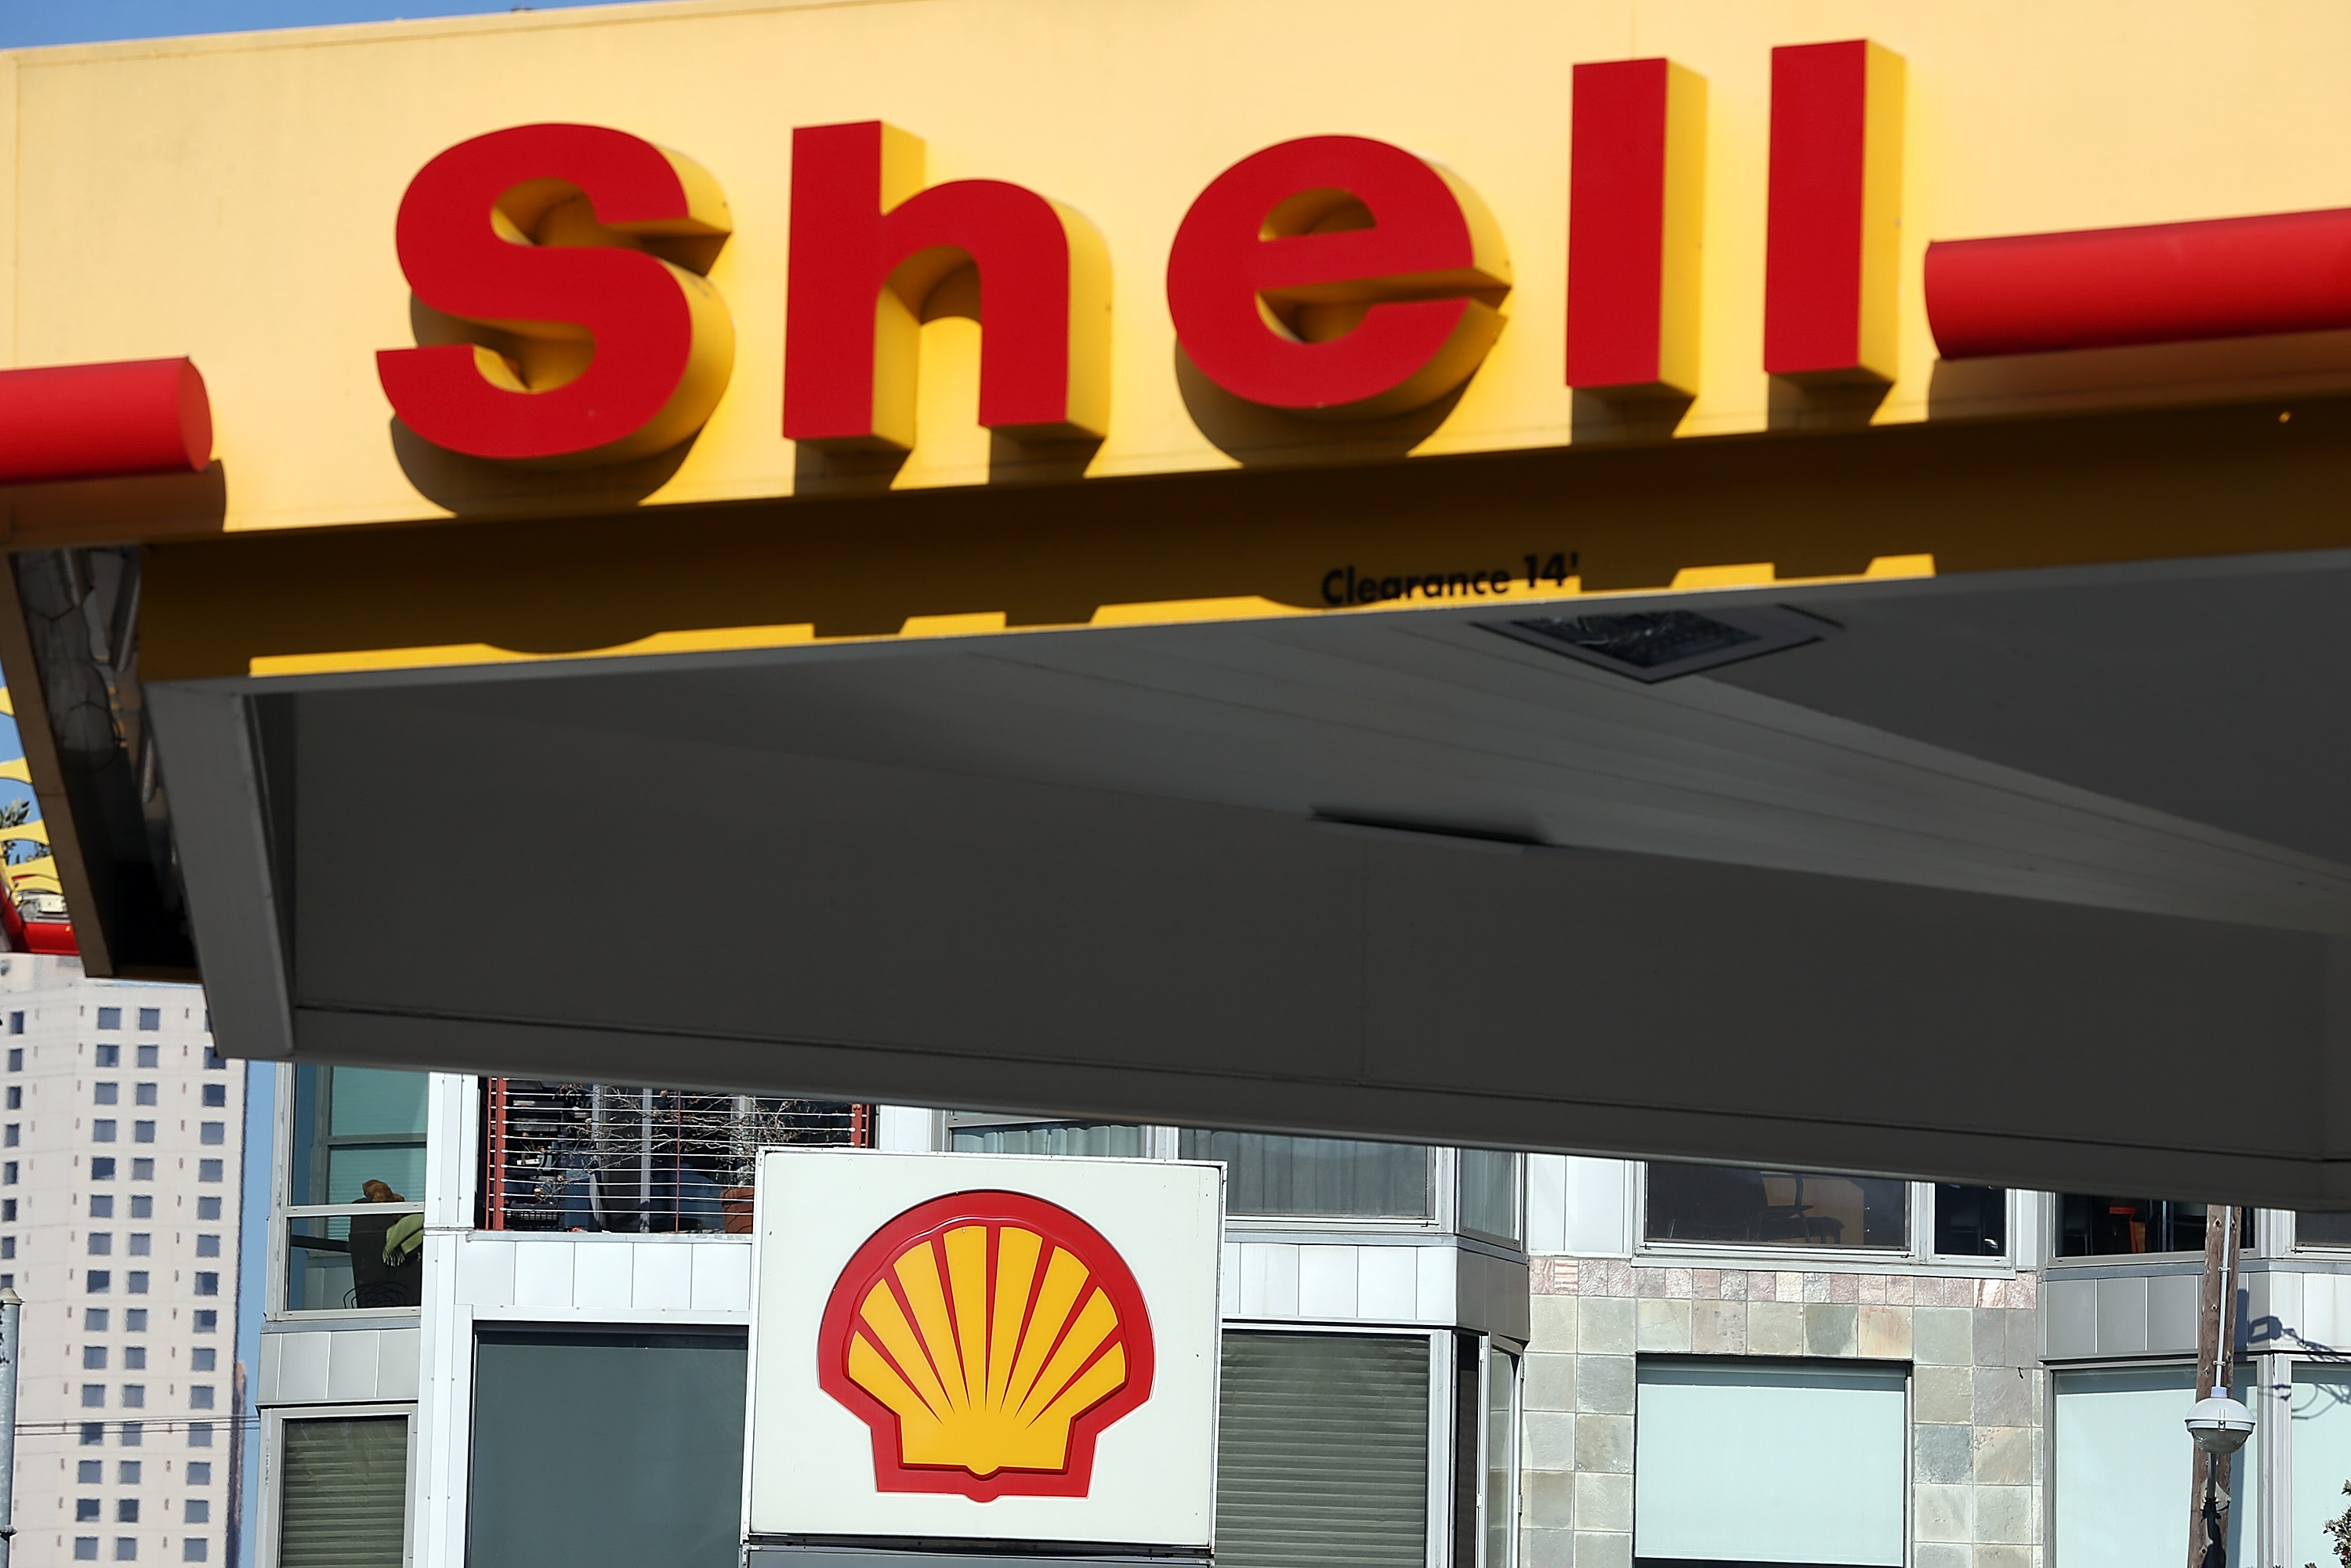 Royal Dutch Shell is buying BG for $70 billion